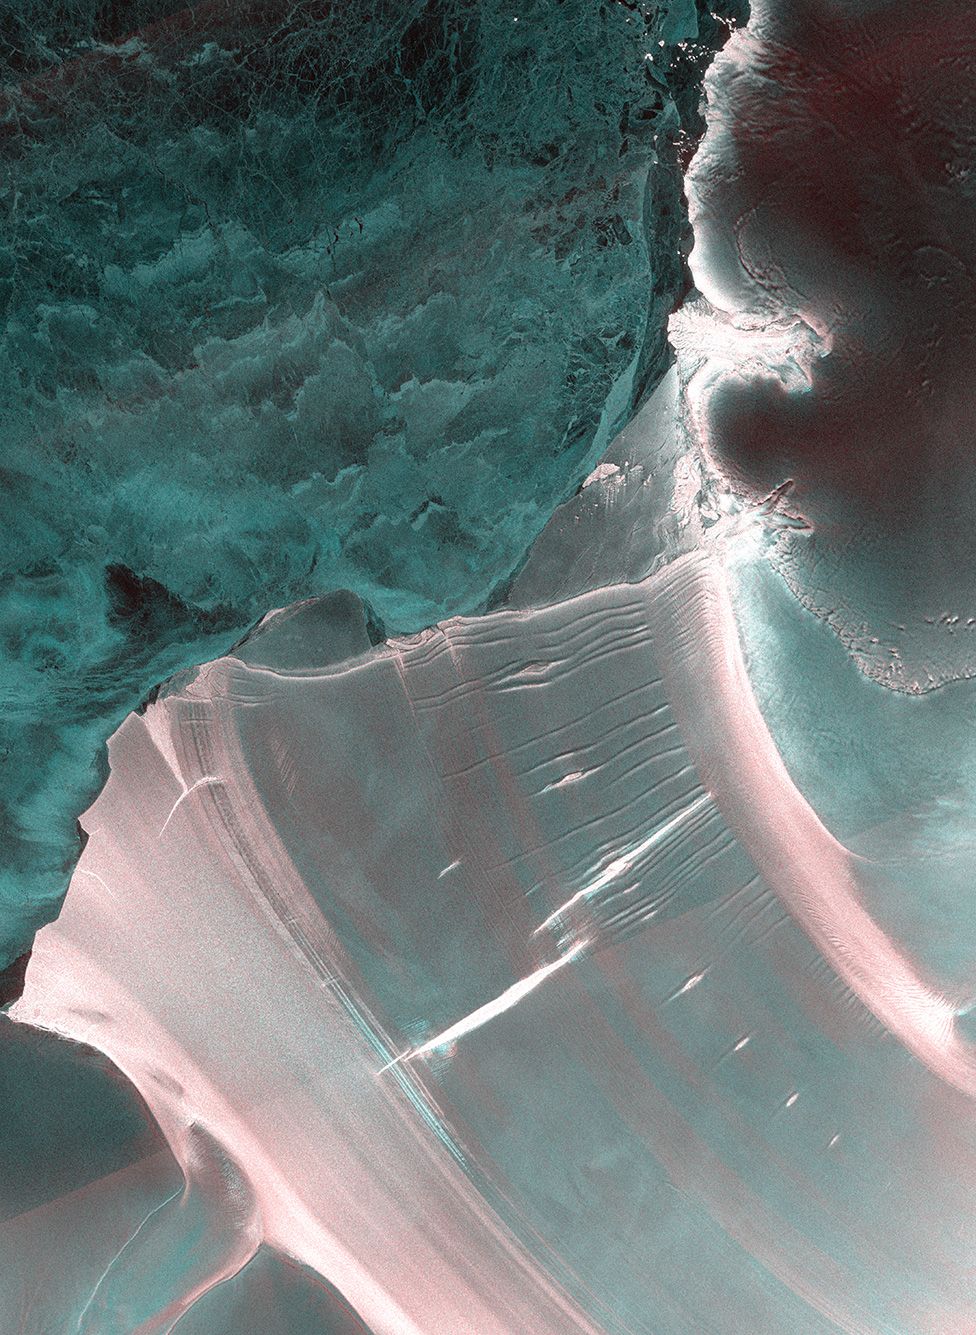 Sentinel-1 image composite showing the crevassed, fast-flowing terminus of Filcher Ice Shelf, Antarctica,